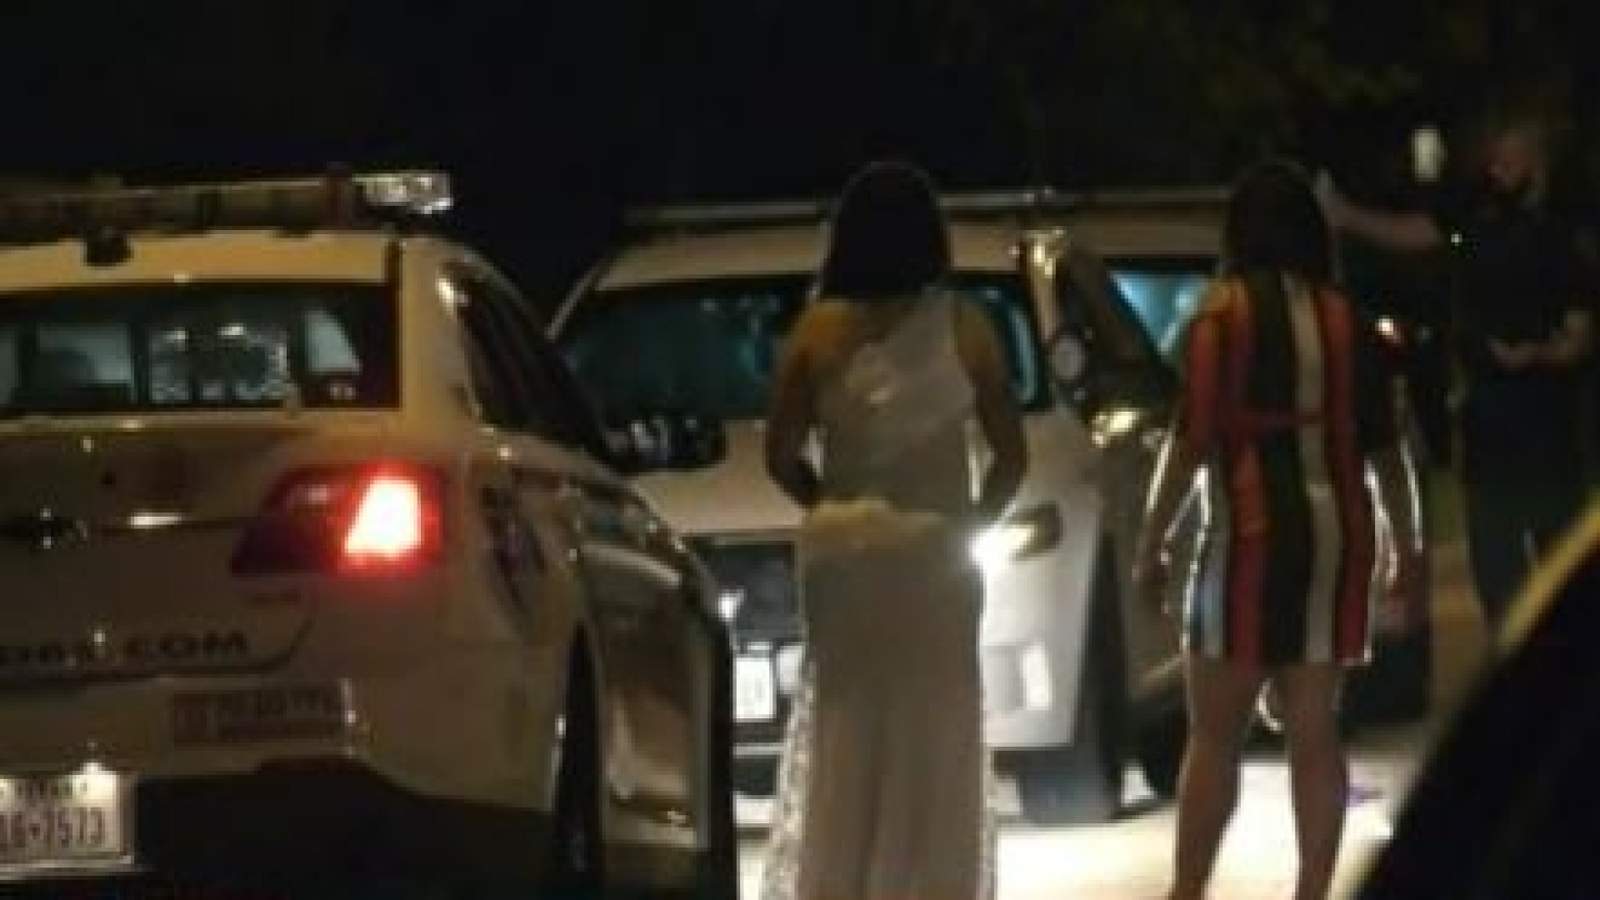 Groom shot in chest on wedding day in northwest Harris County, deputies say